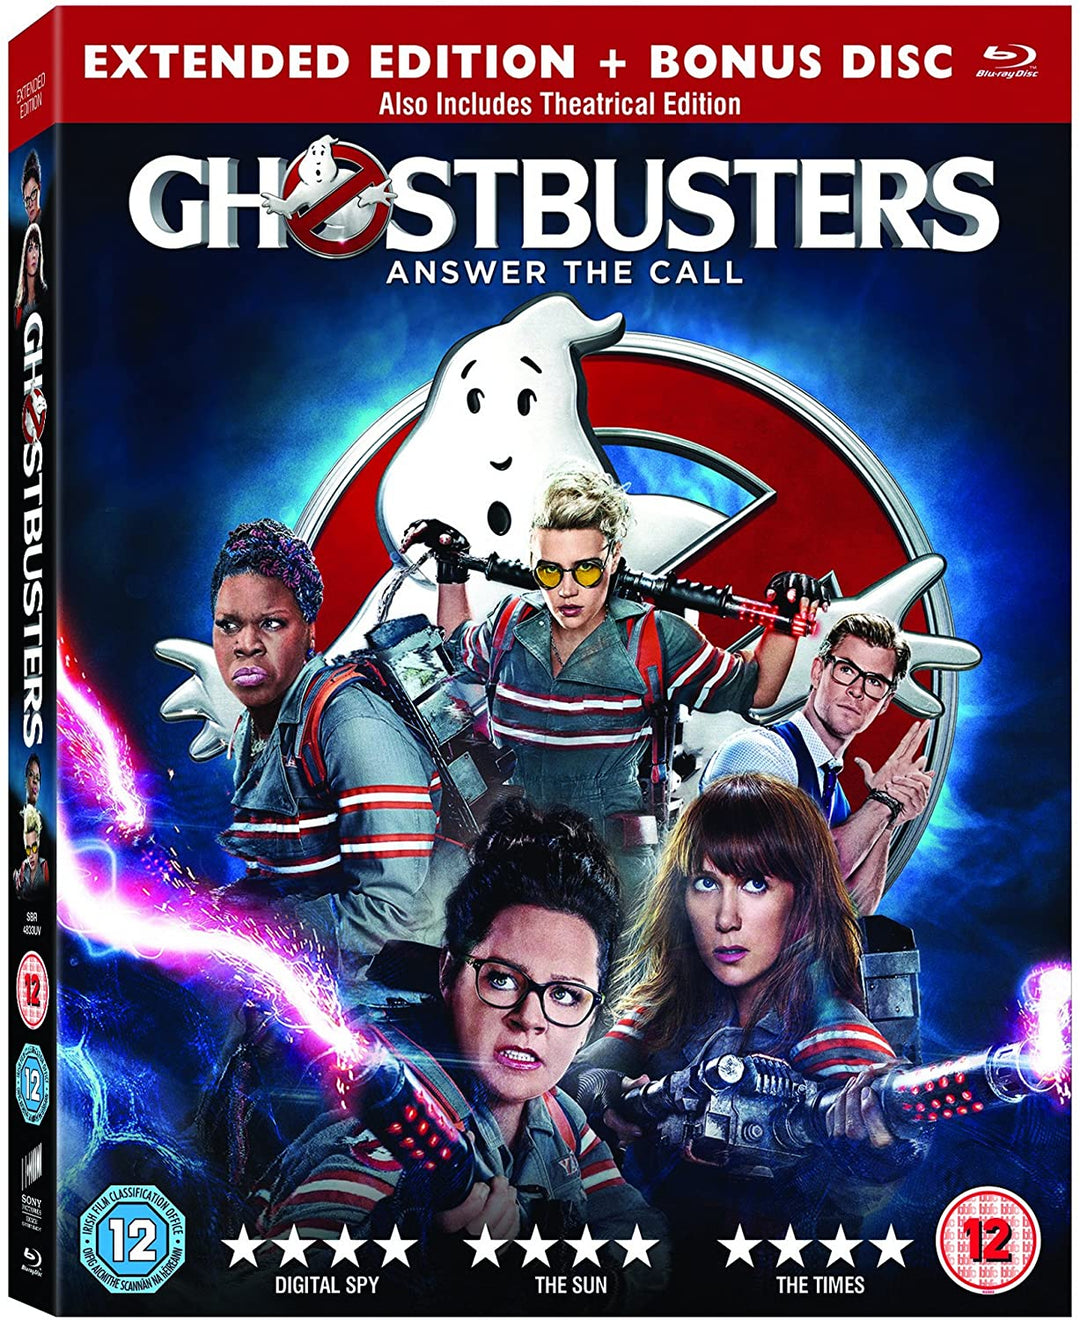 Ghostbusters [Blu-ray] [2016] [Regio vrij]